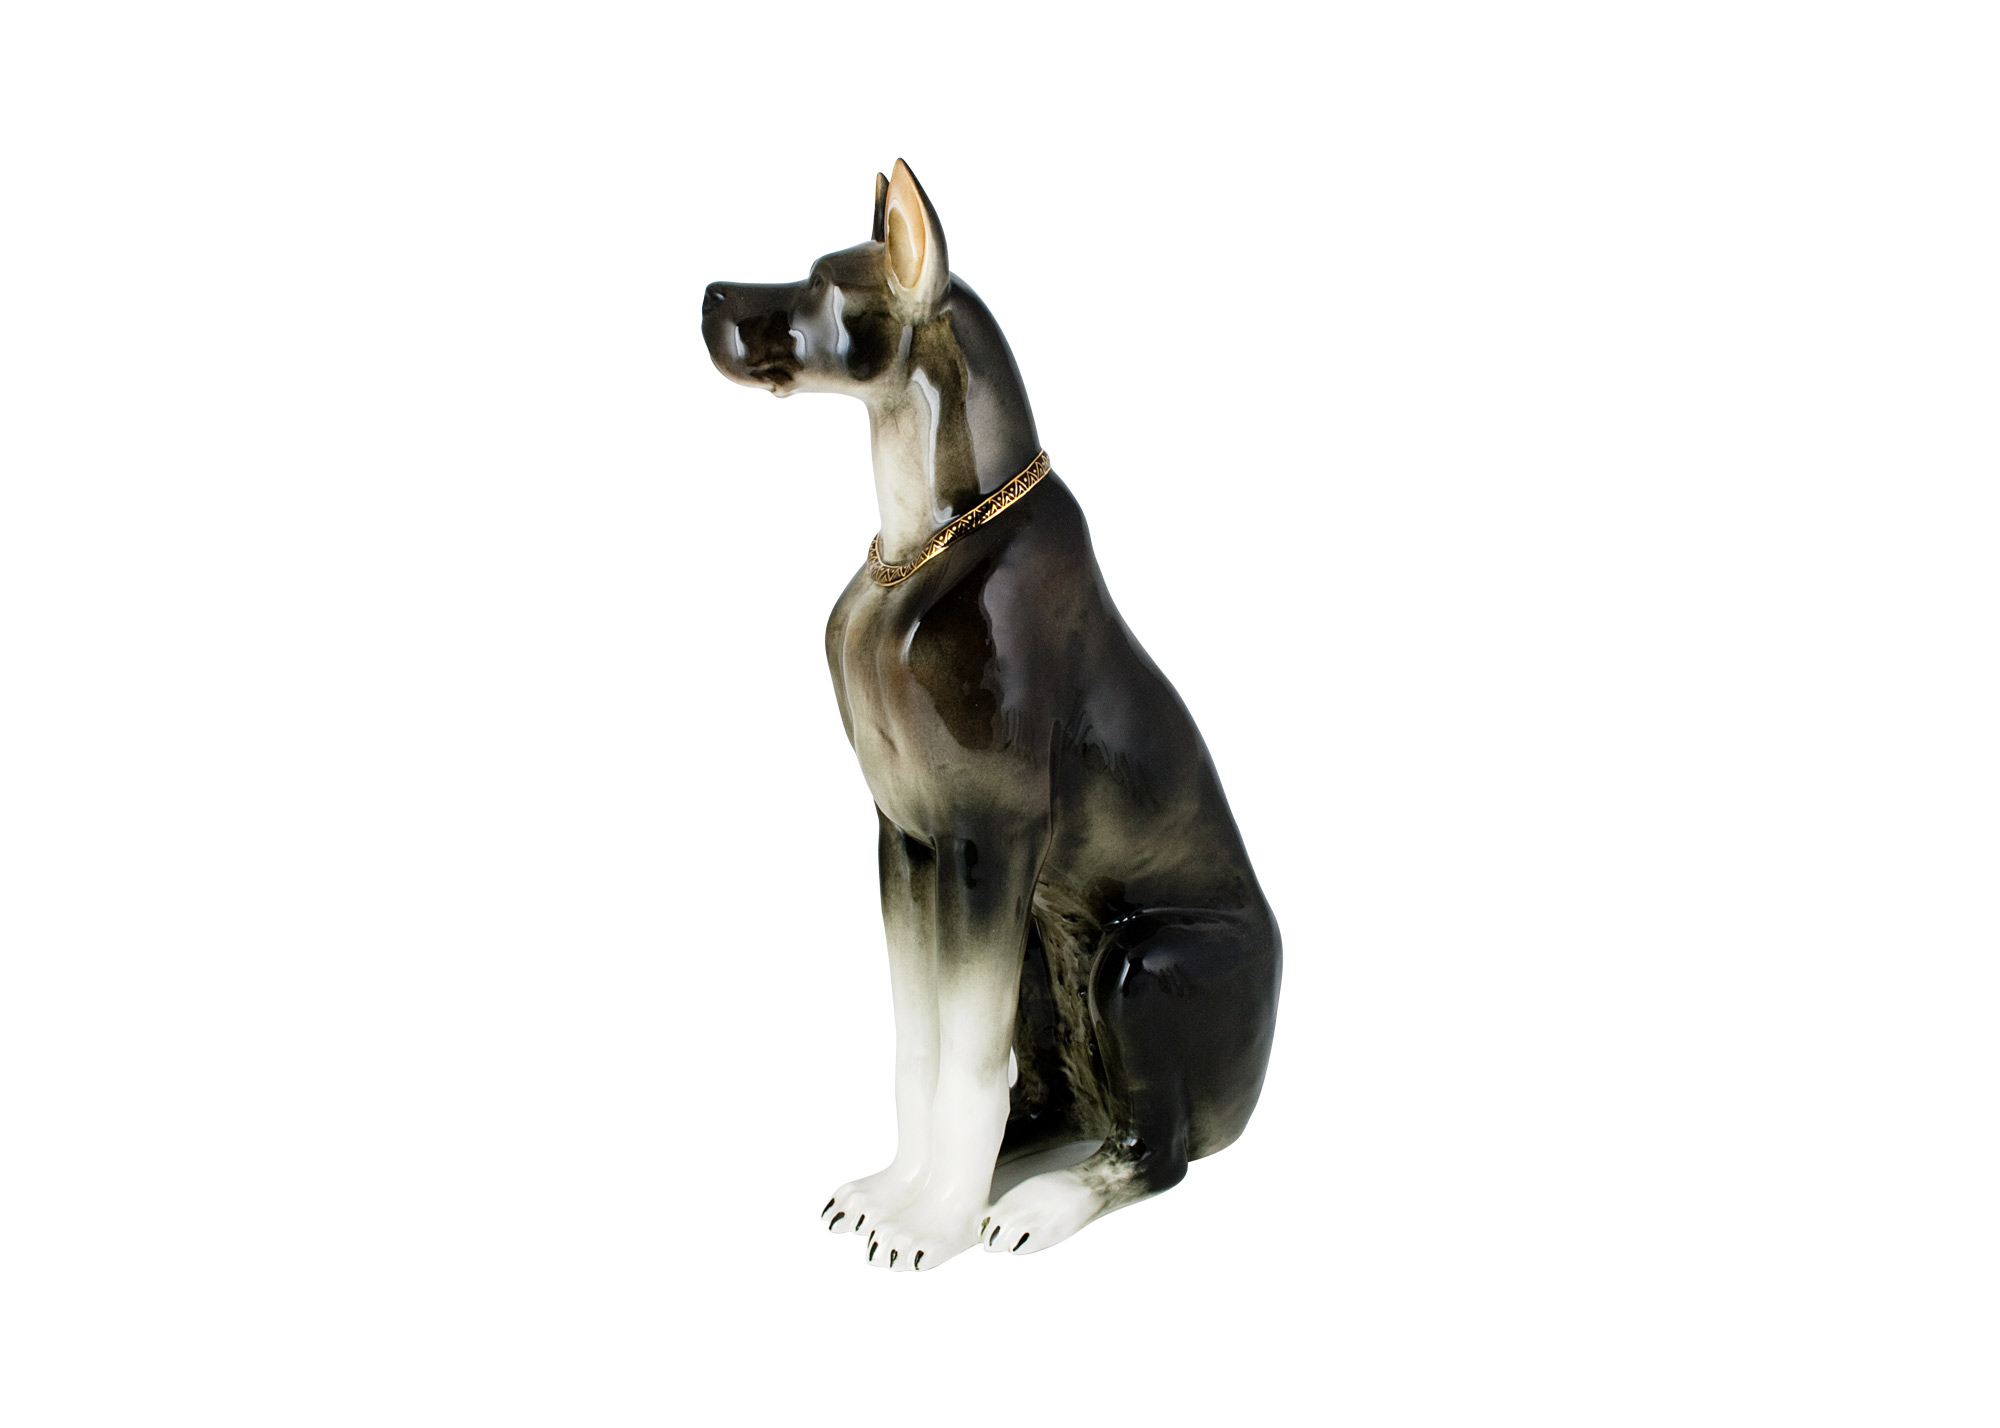 Buy Sitting Black Great Dane Figurine at GoldenCockerel.com